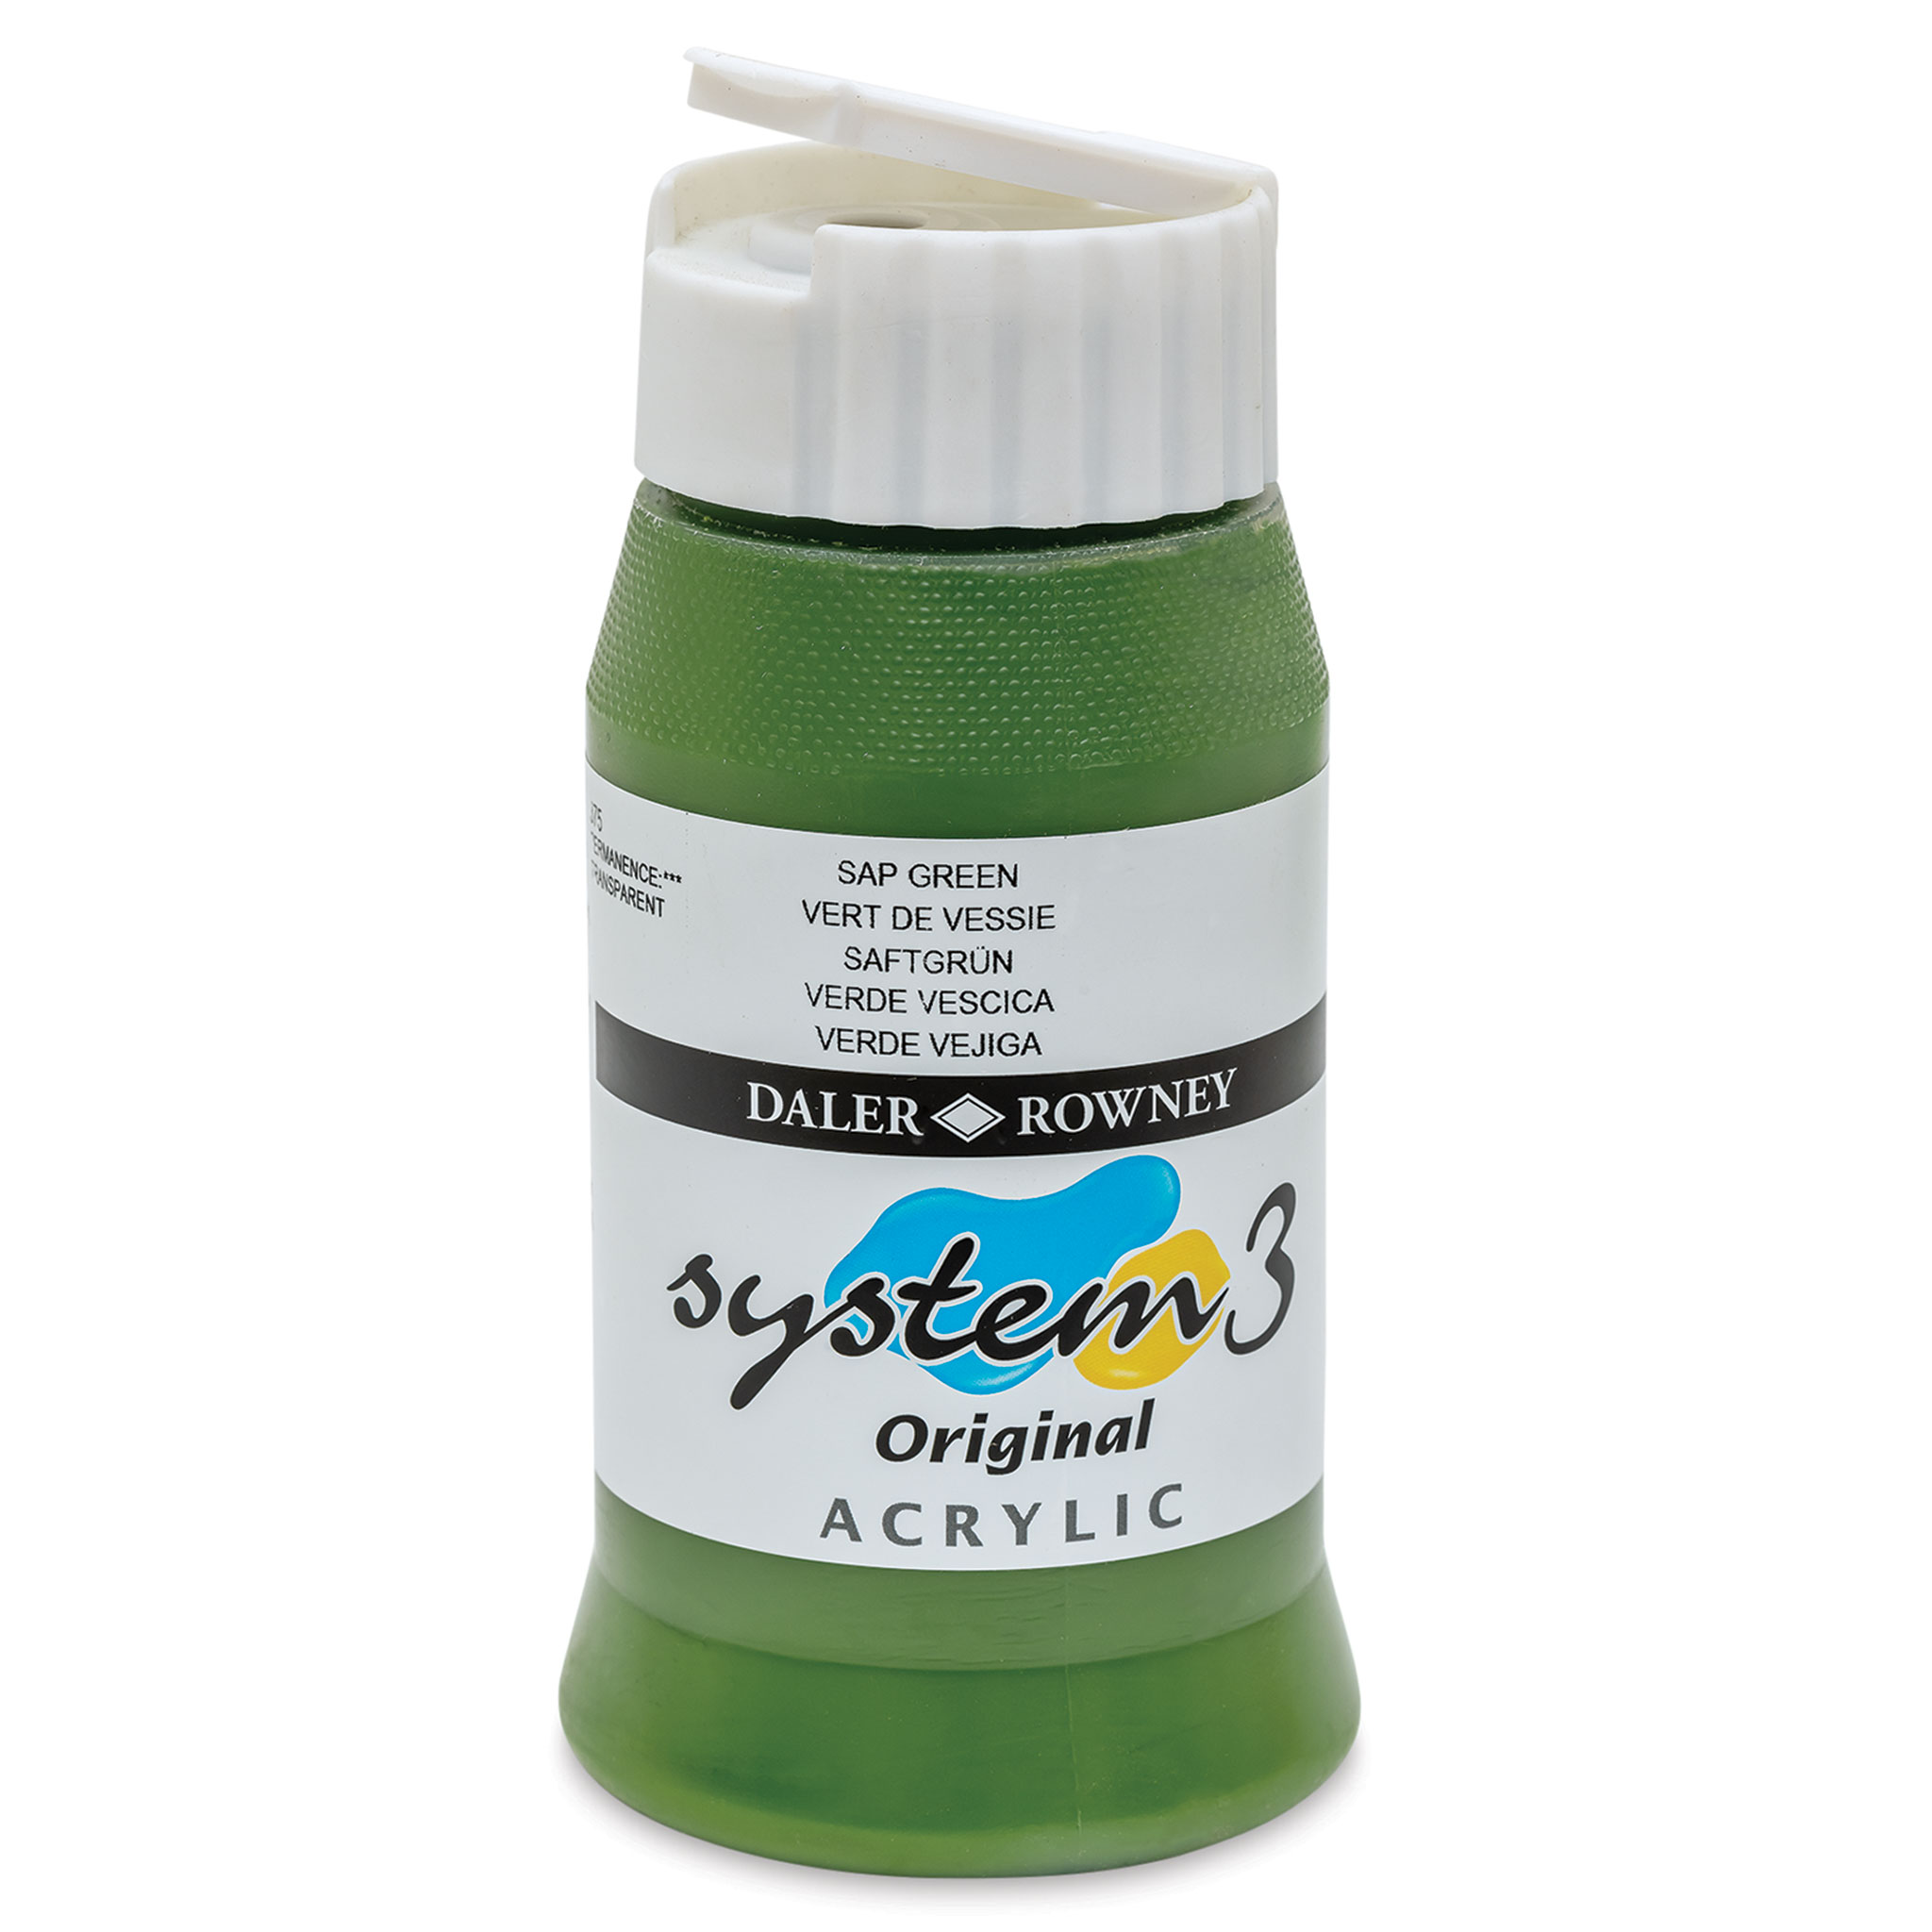 Daler-Rowney System3 Acrylic Ink - Sap Green, 1 oz 